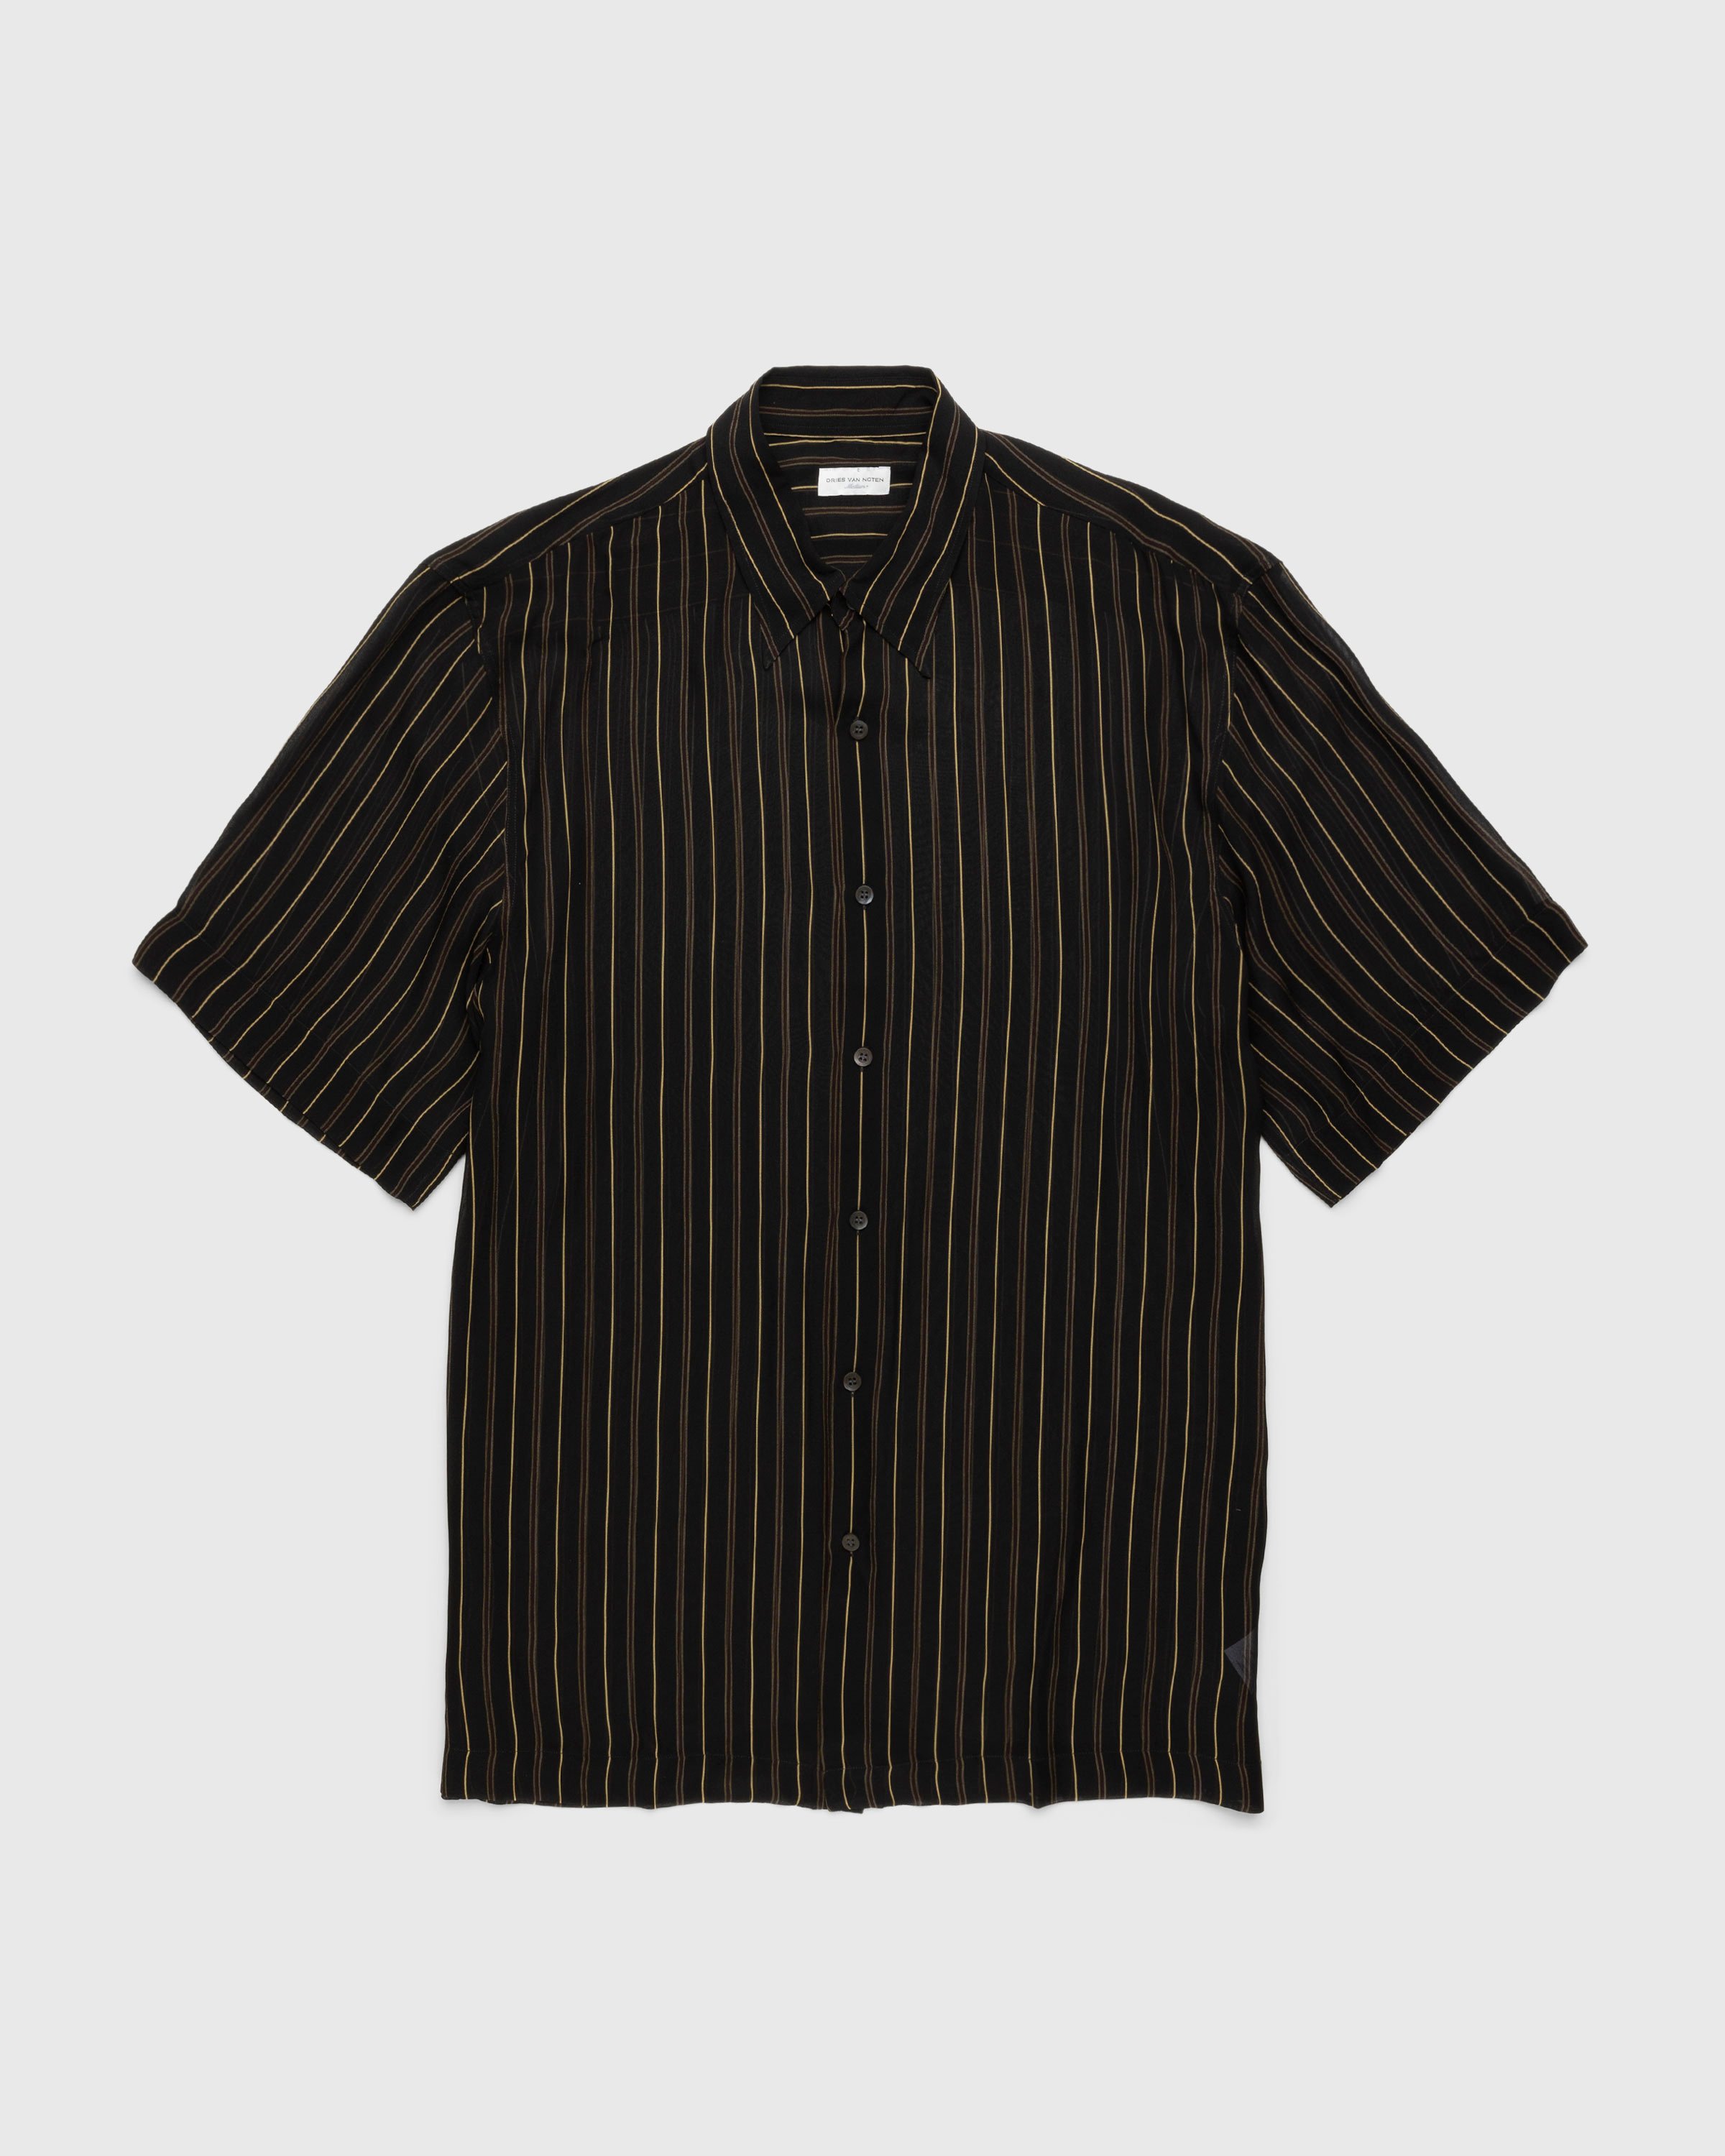 Dries van Noten - Cassidye Shirt Black - Clothing - Black - Image 1